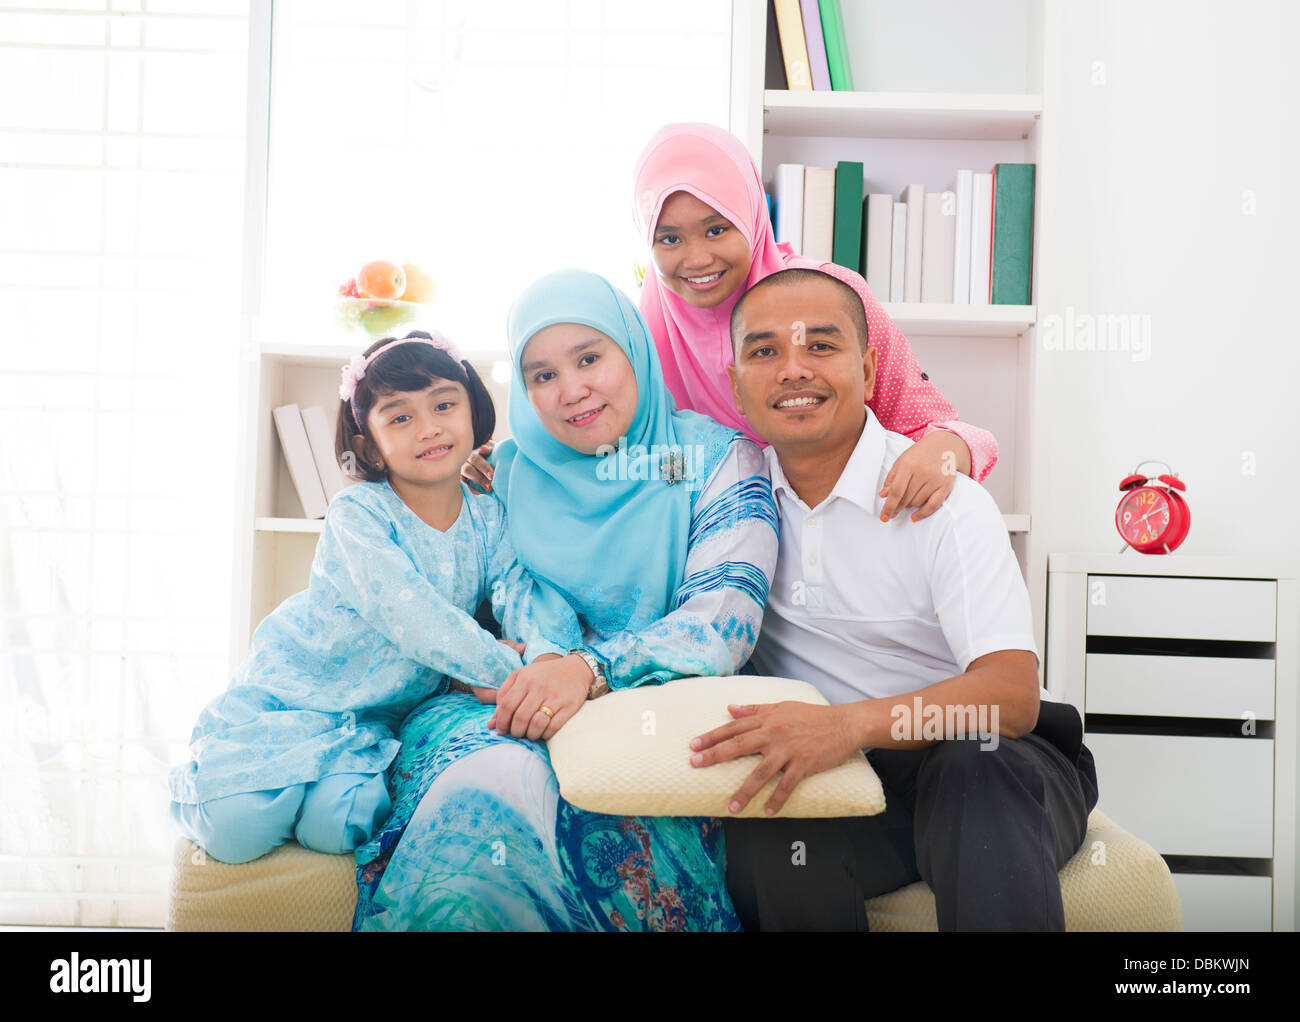 muslim malays family Indoor portrait Stock Photo